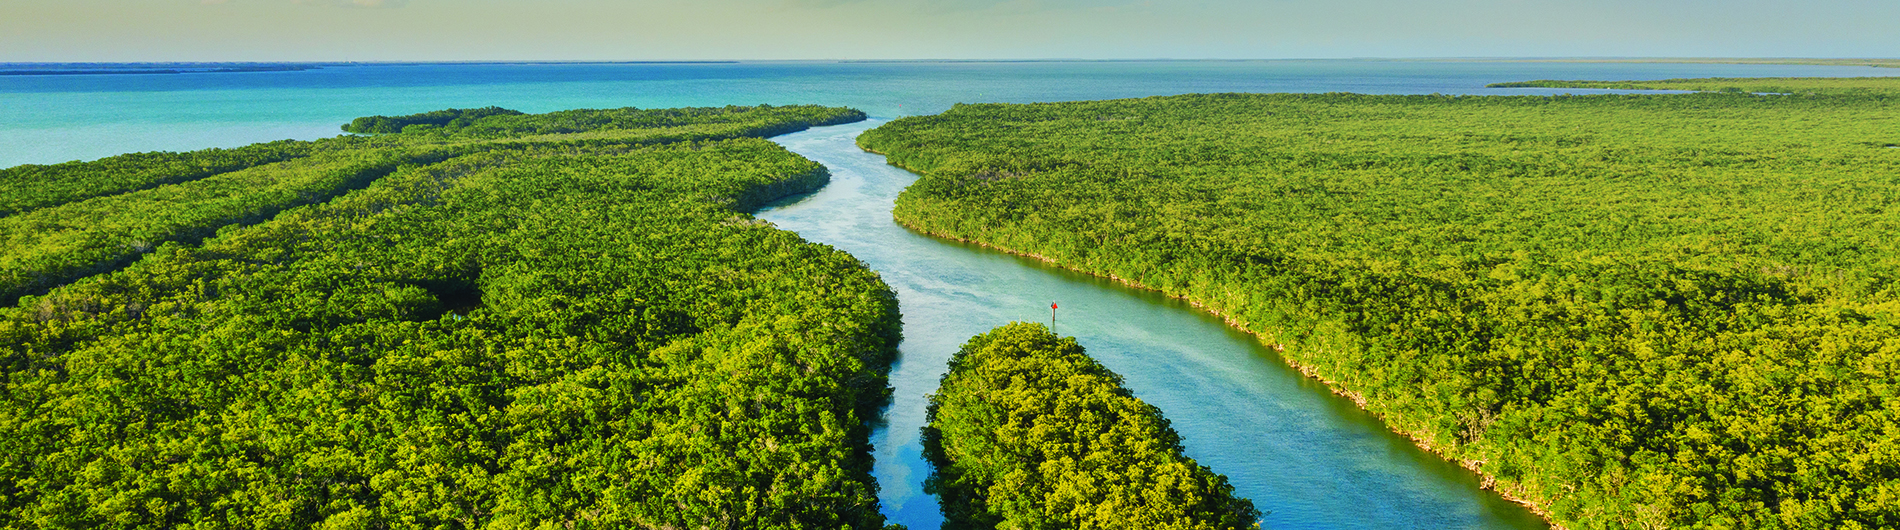 aerial view of the Florida Everglades